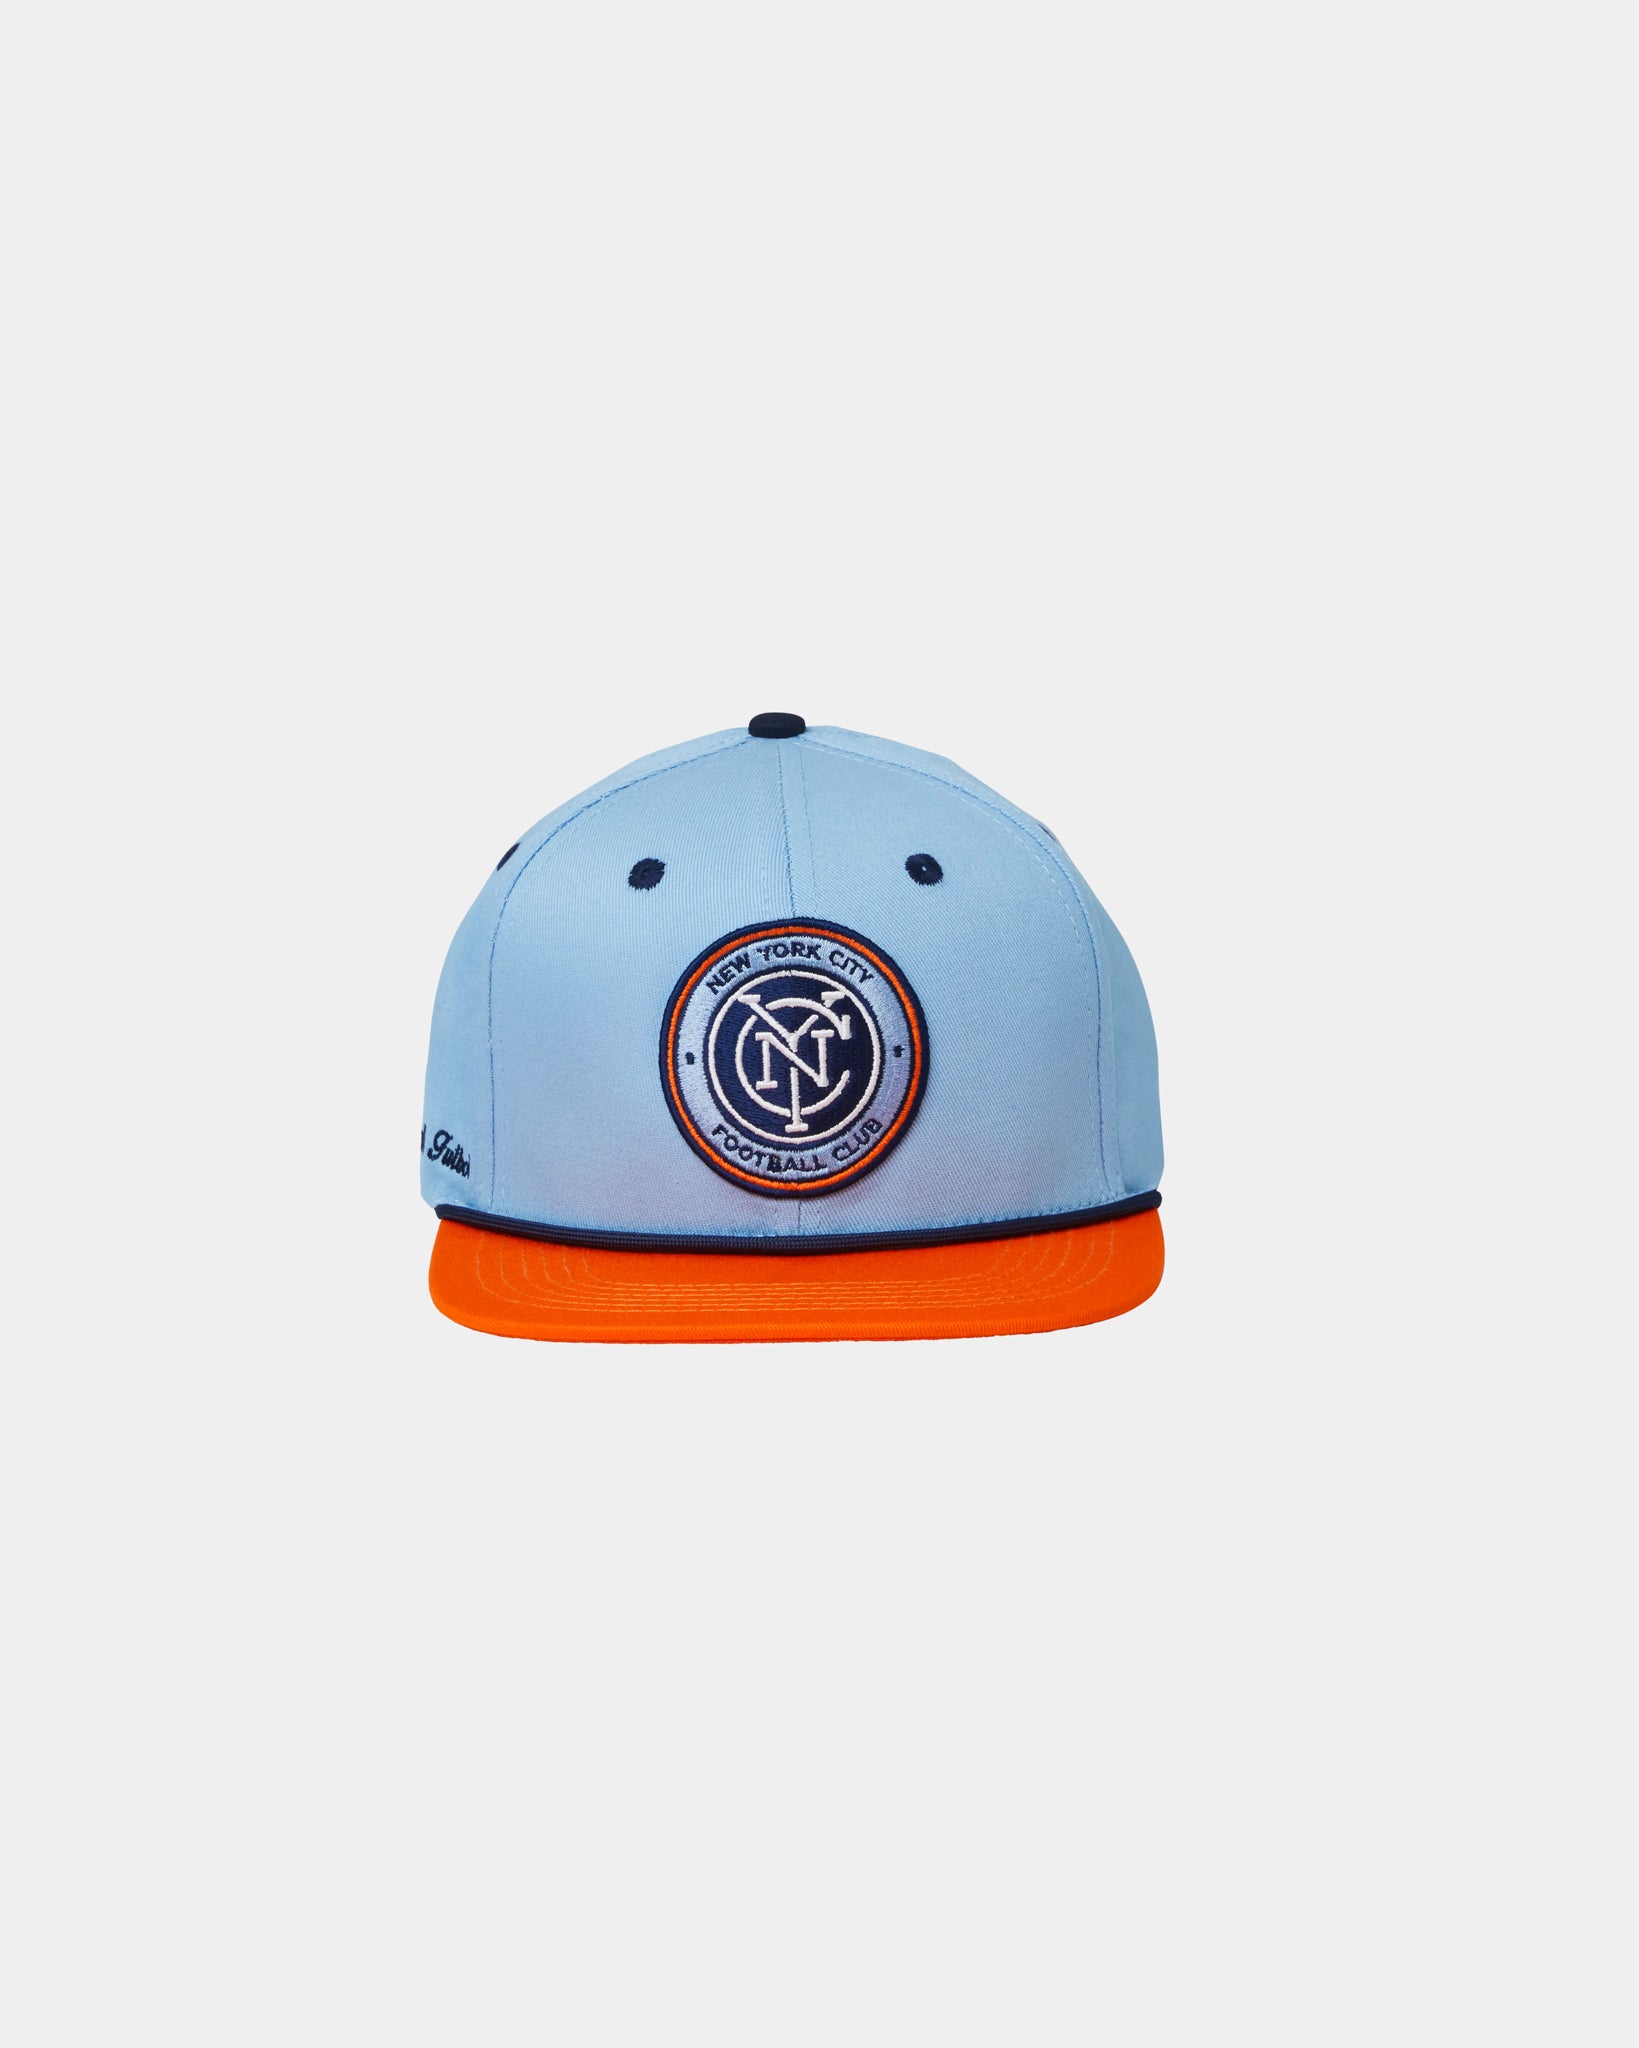 NYCFC Crest Snapback Cap